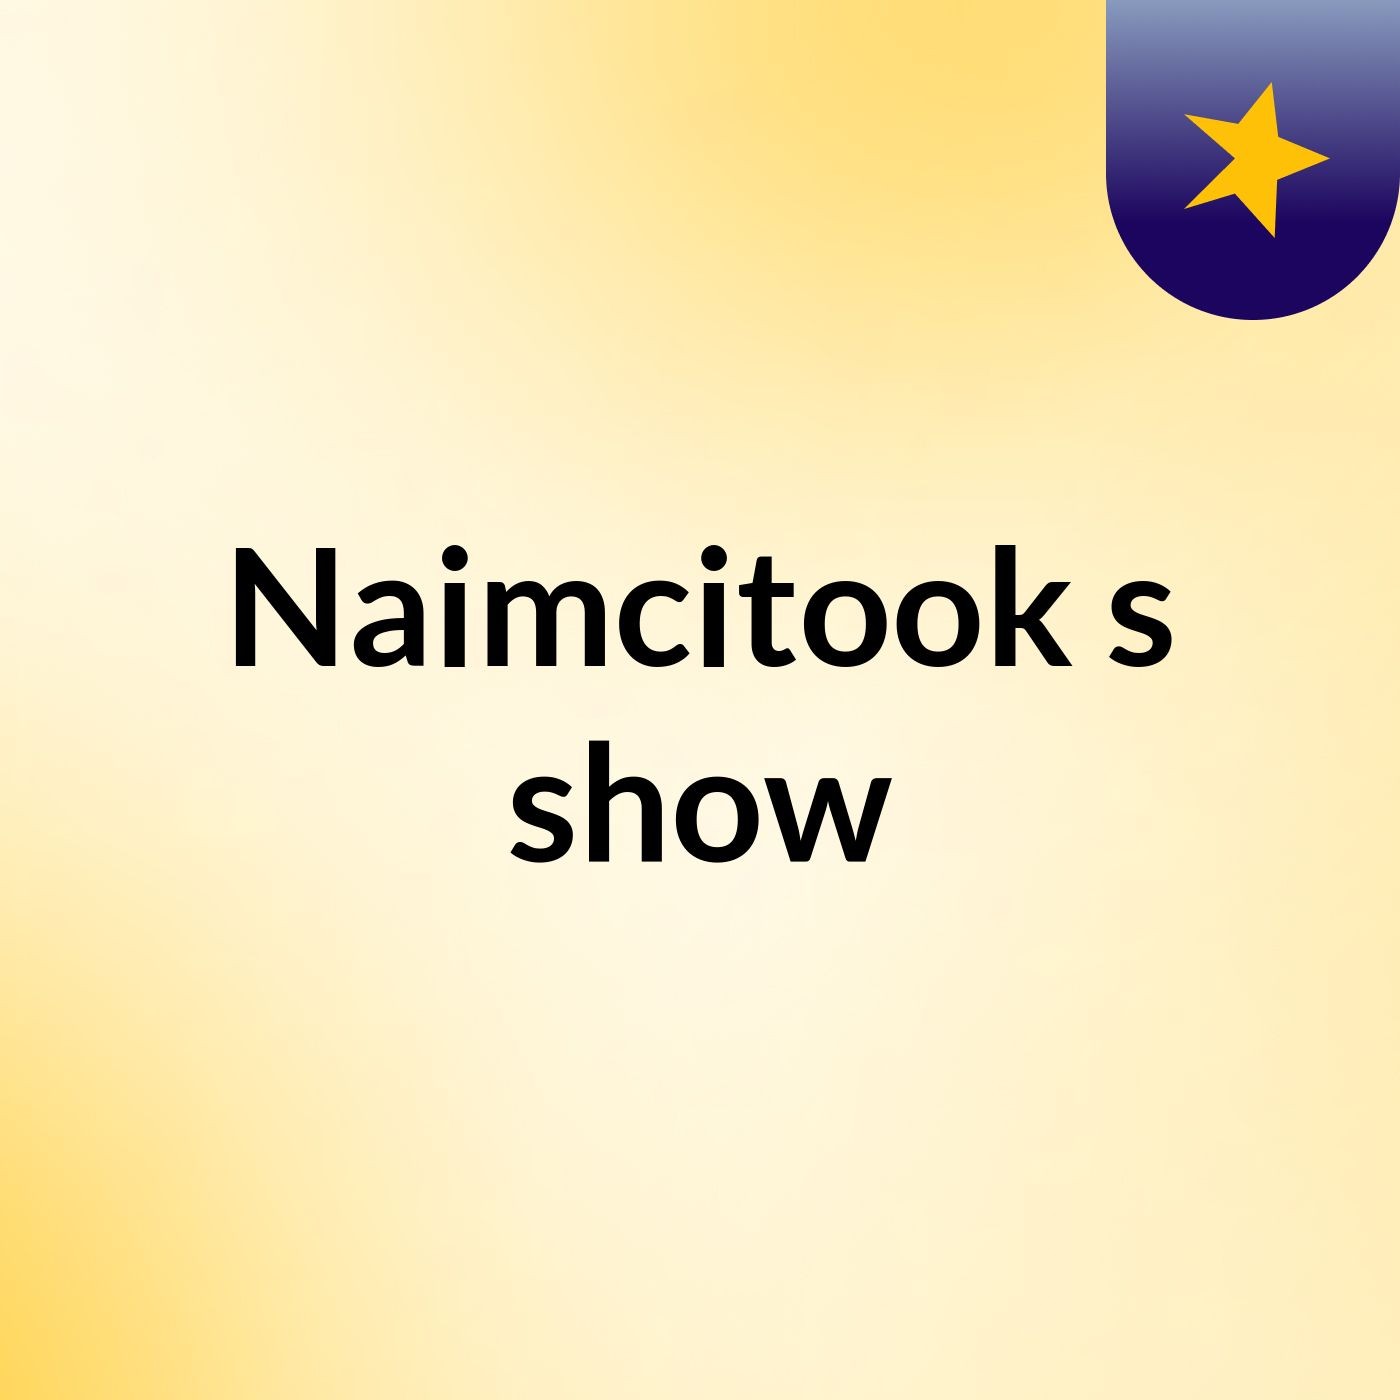 Naimcitook's show